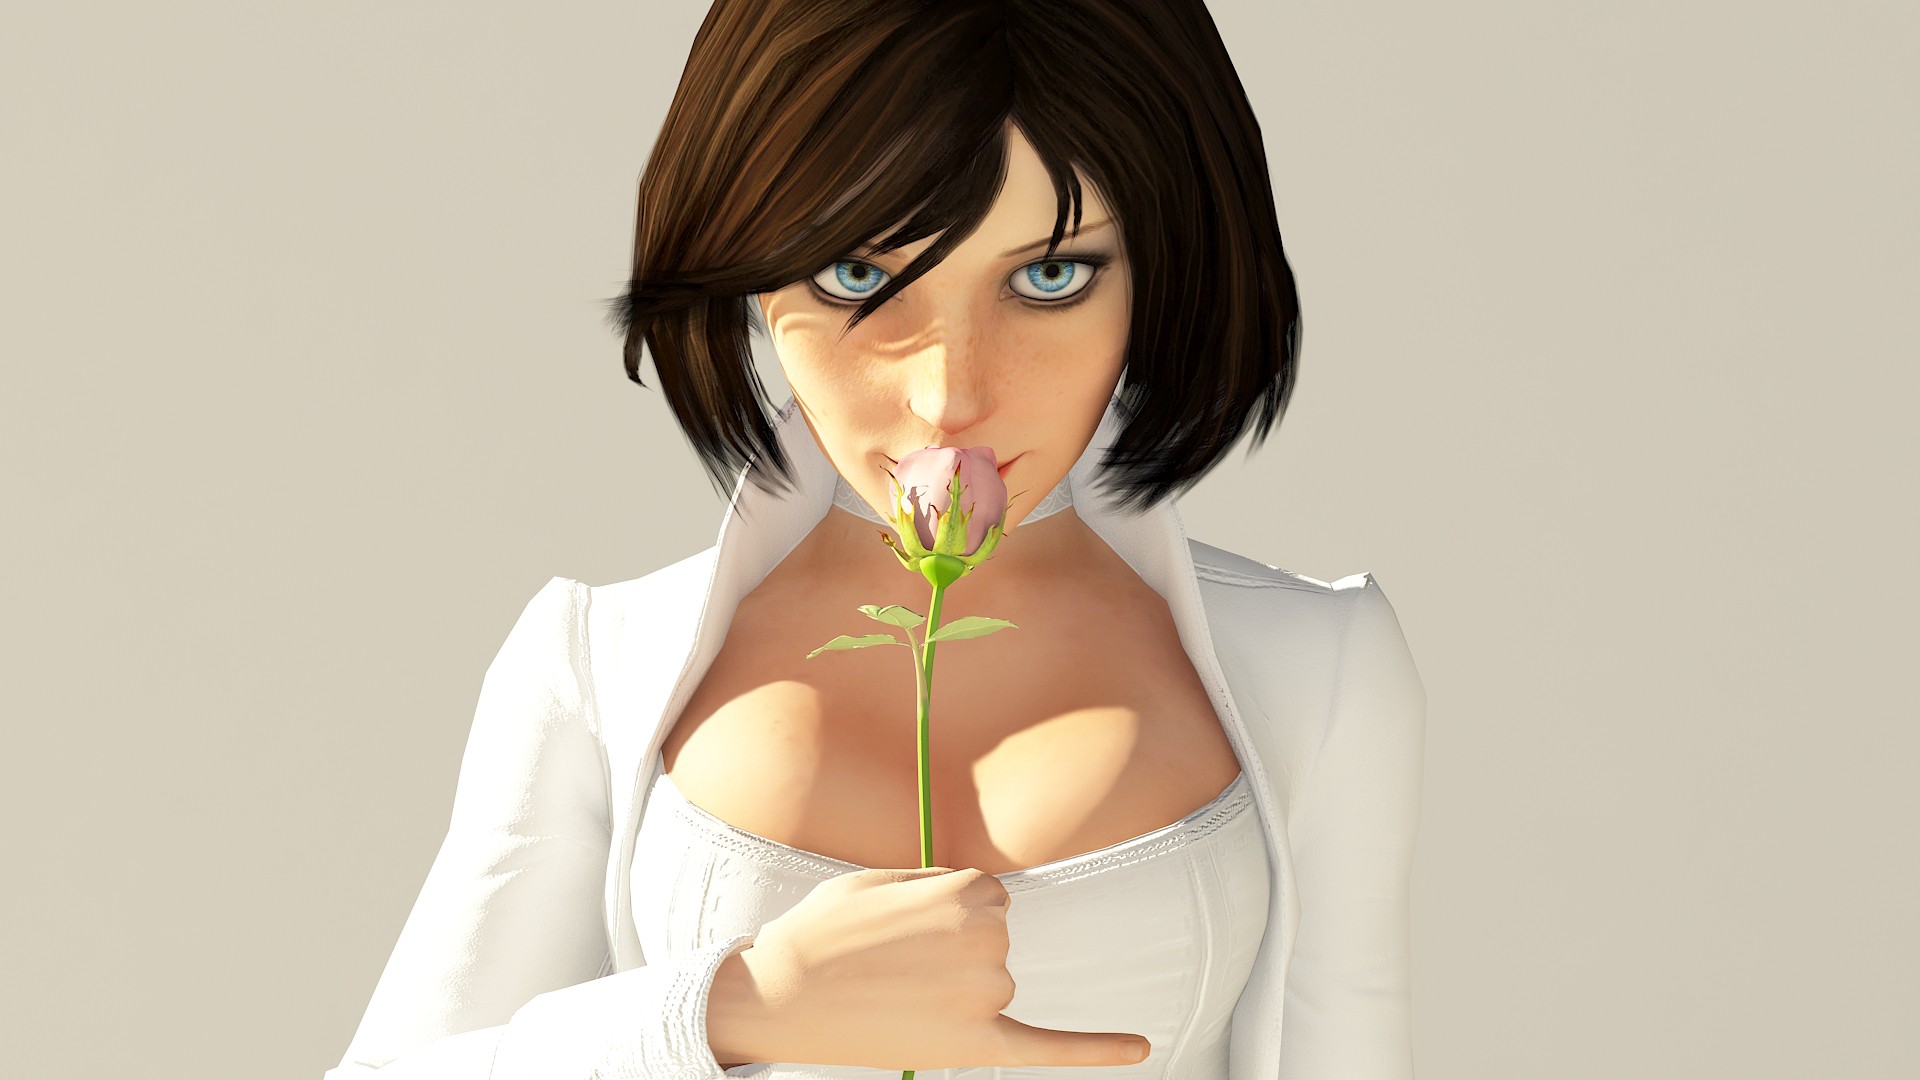 Elizabeth (BioShock), BioShock, BioShock Infinite Wallpaper